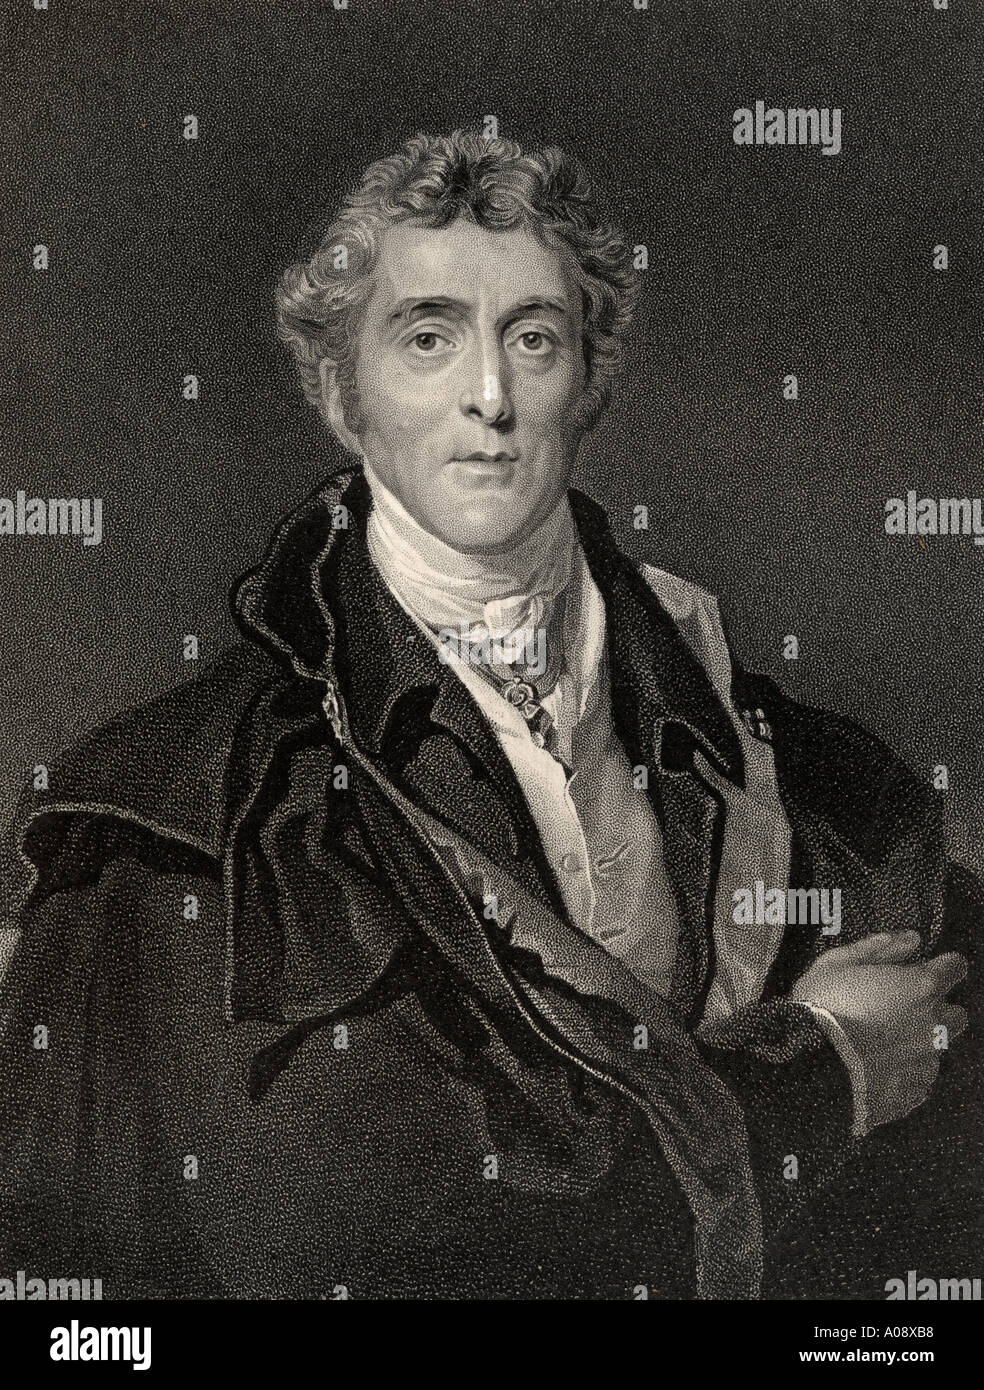 Arthur Wellesley, 1st Duke of Wellington, 1769 - 1852. British soldier and statesman. Stock Photo